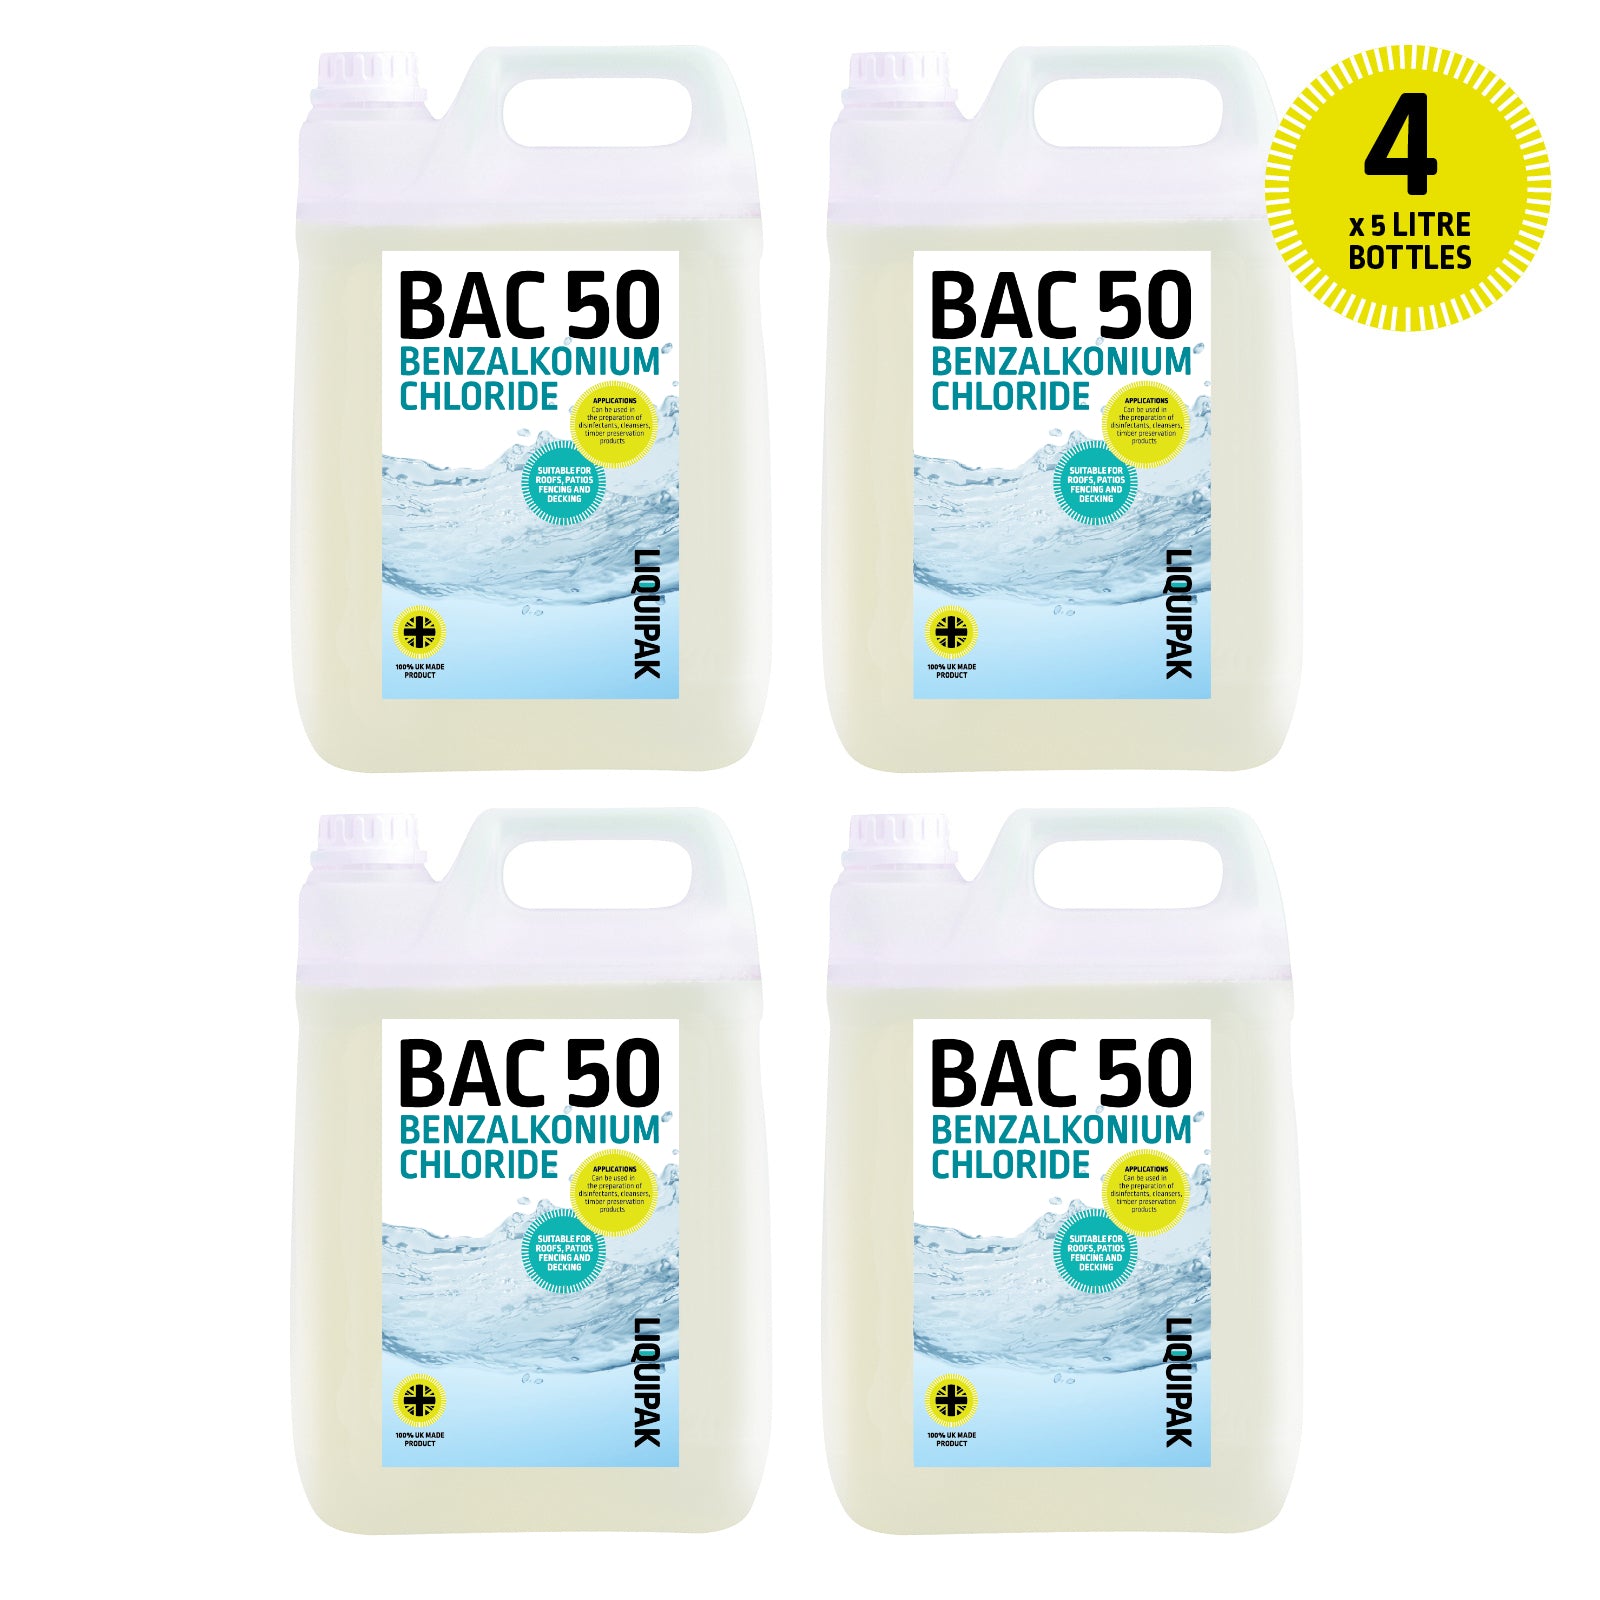 BAC 50 | Benzalkonium Chloride